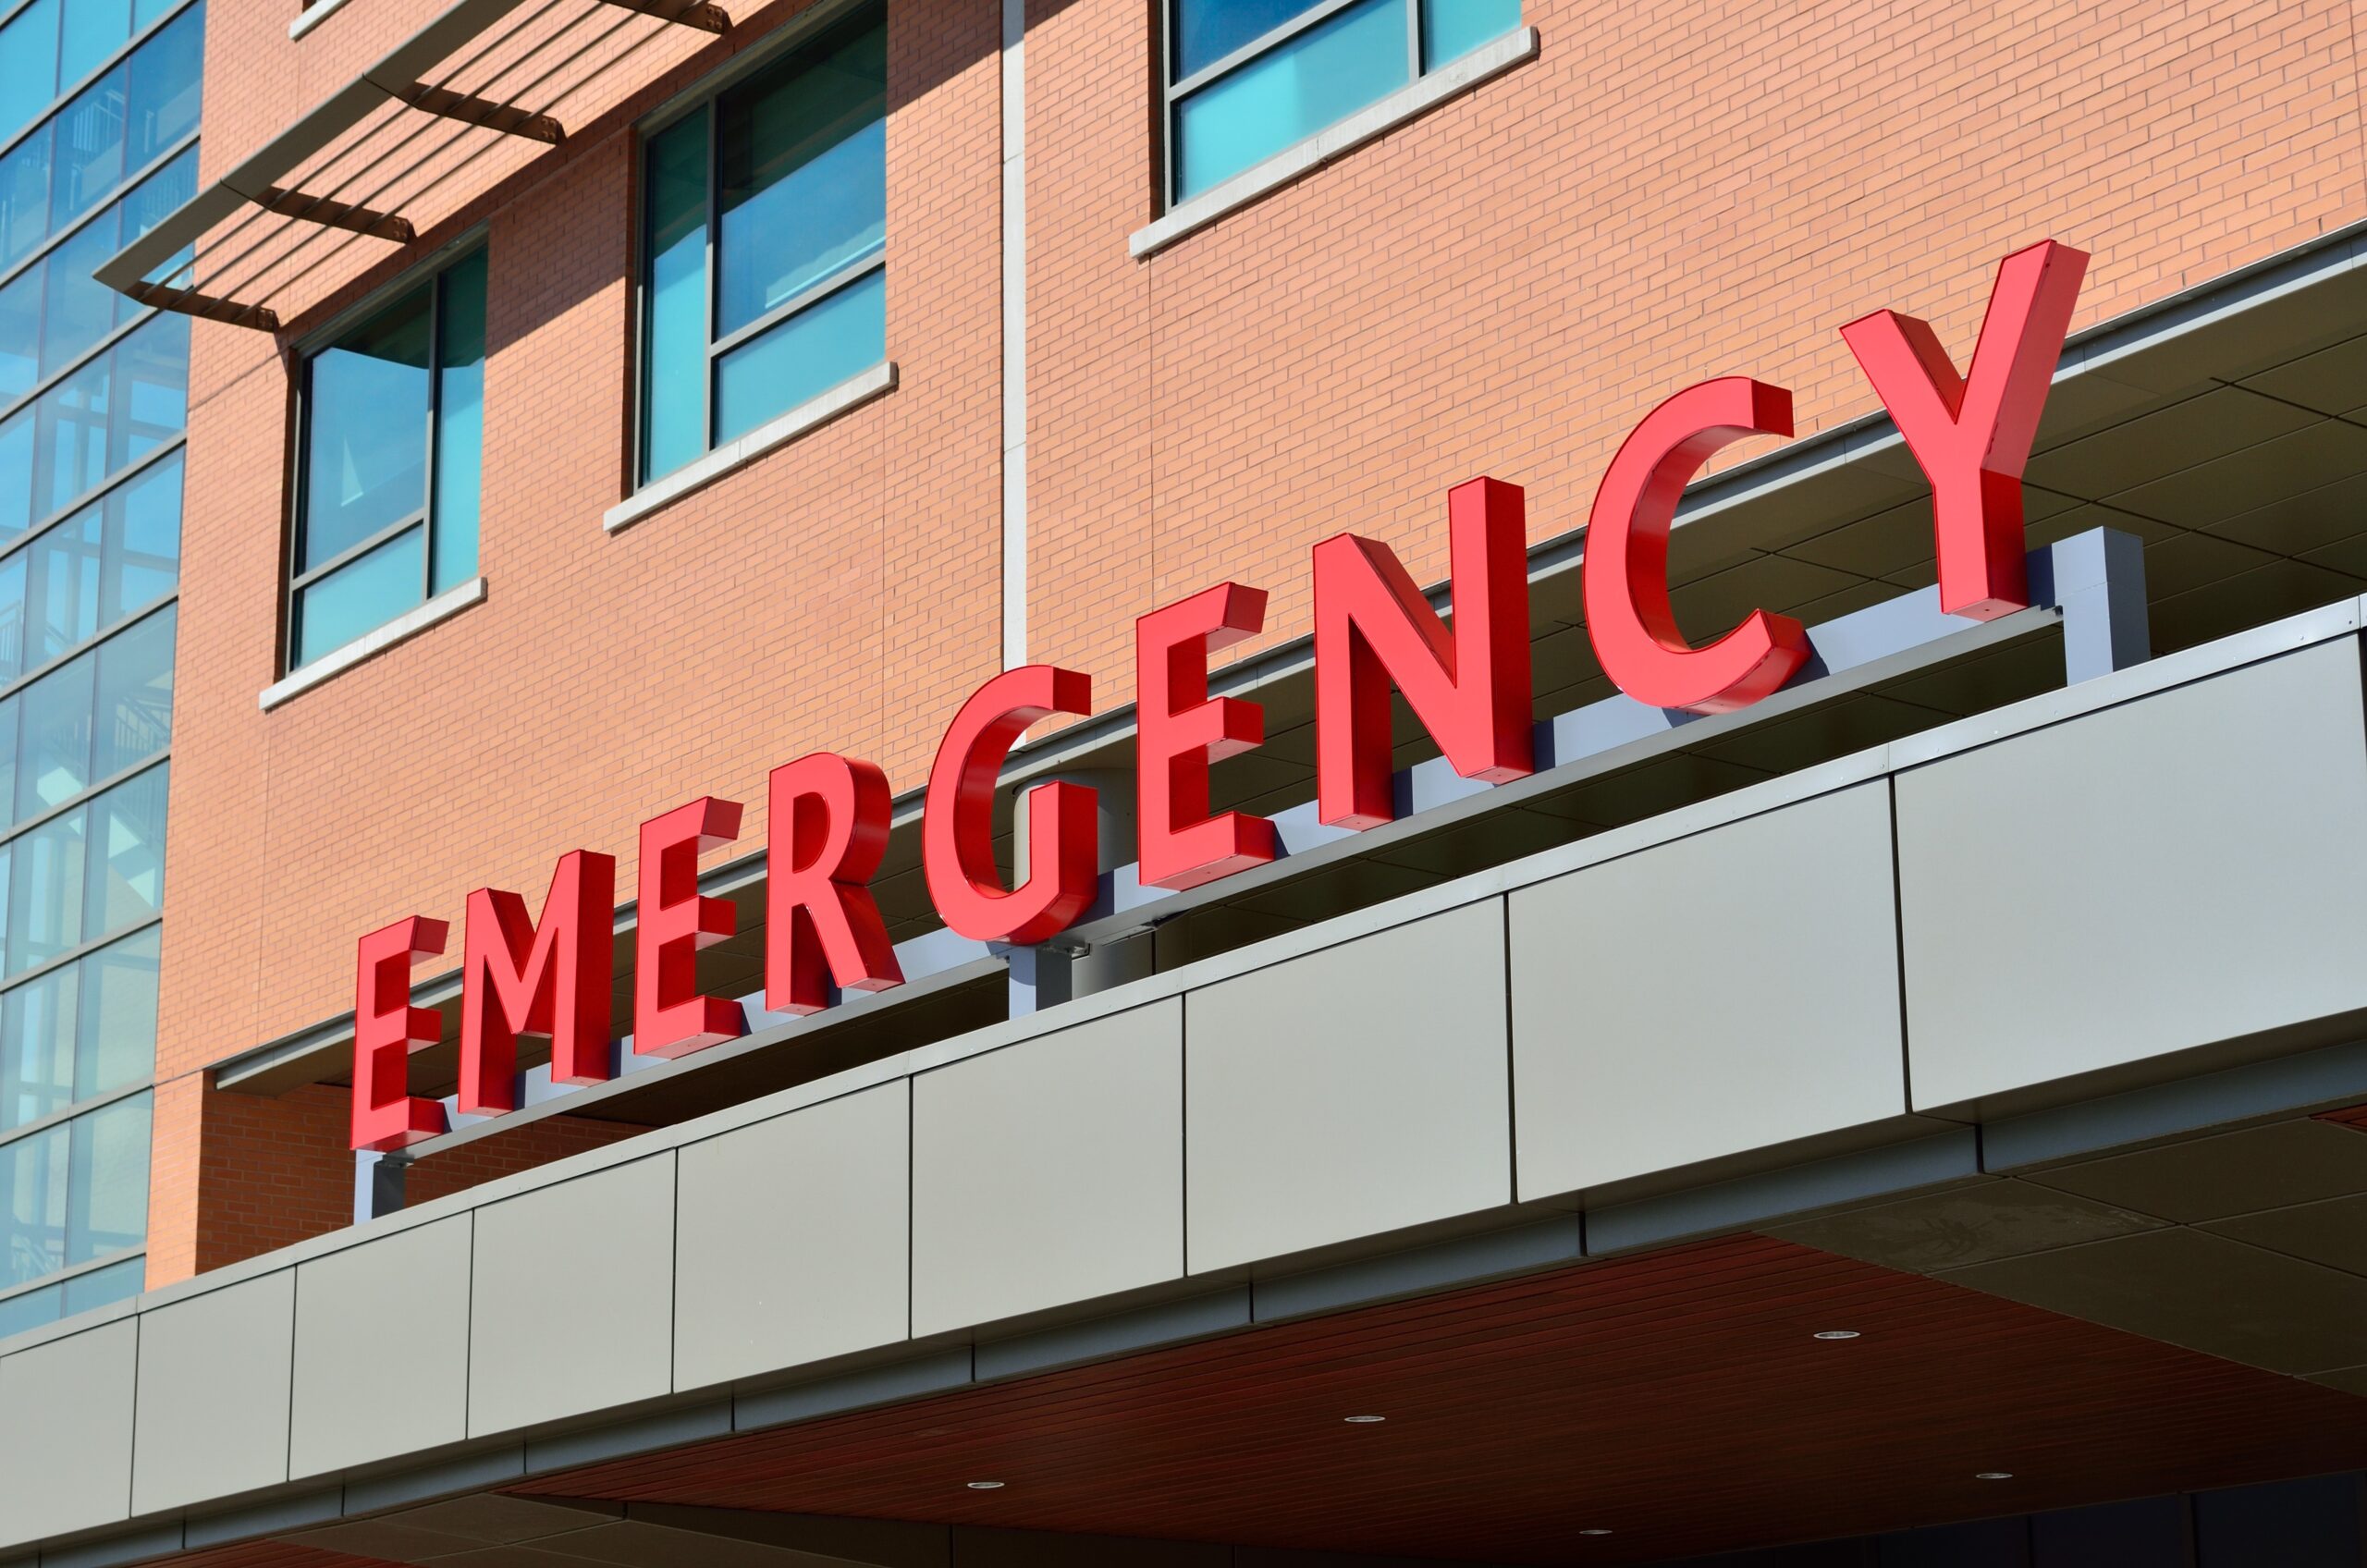 A hospital emergency room entrance